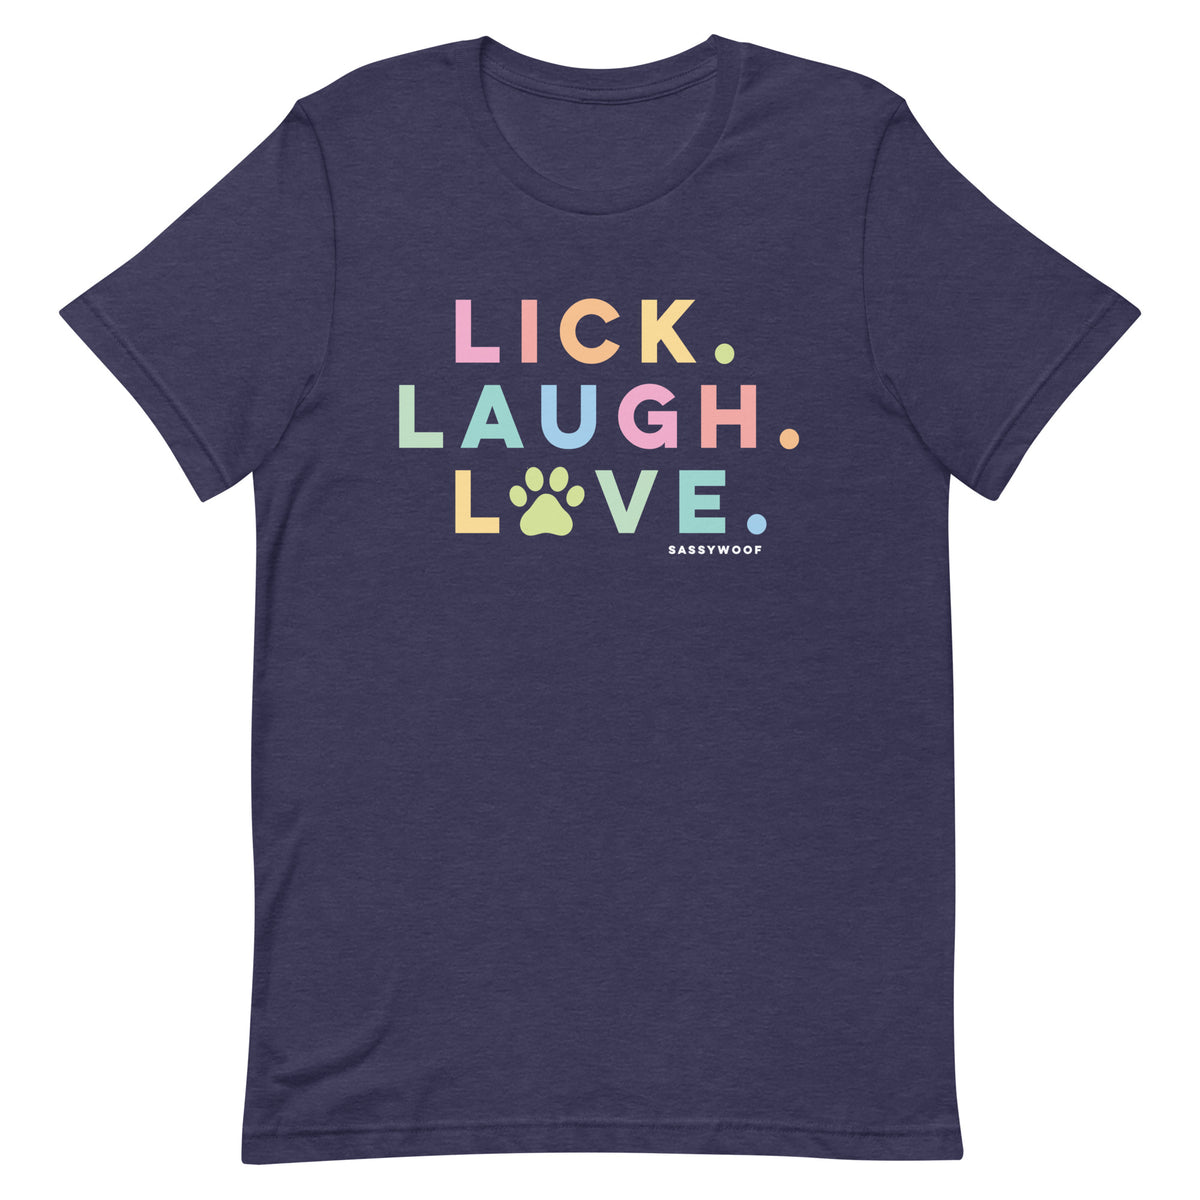 Lick, Laugh, Love Tee